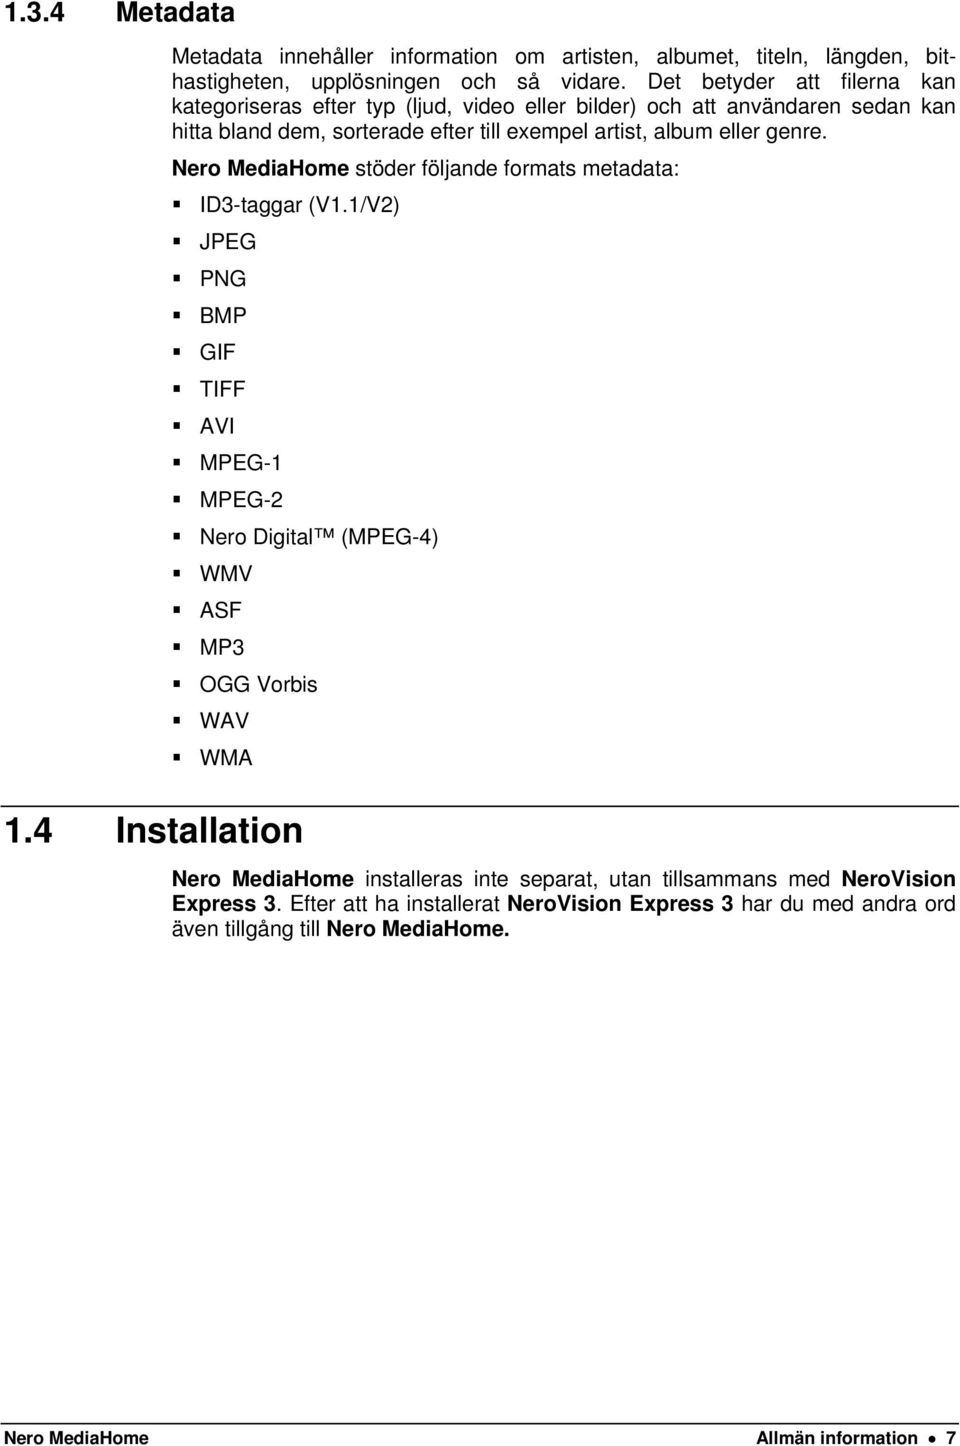 genre. Nero MediaHome stöder följande formats metadata: ID3-taggar (V1.1/V2) JPEG PNG BMP GIF TIFF AVI MPEG-1 MPEG-2 Nero Digital (MPEG-4) WMV ASF MP3 OGG Vorbis WAV WMA 1.